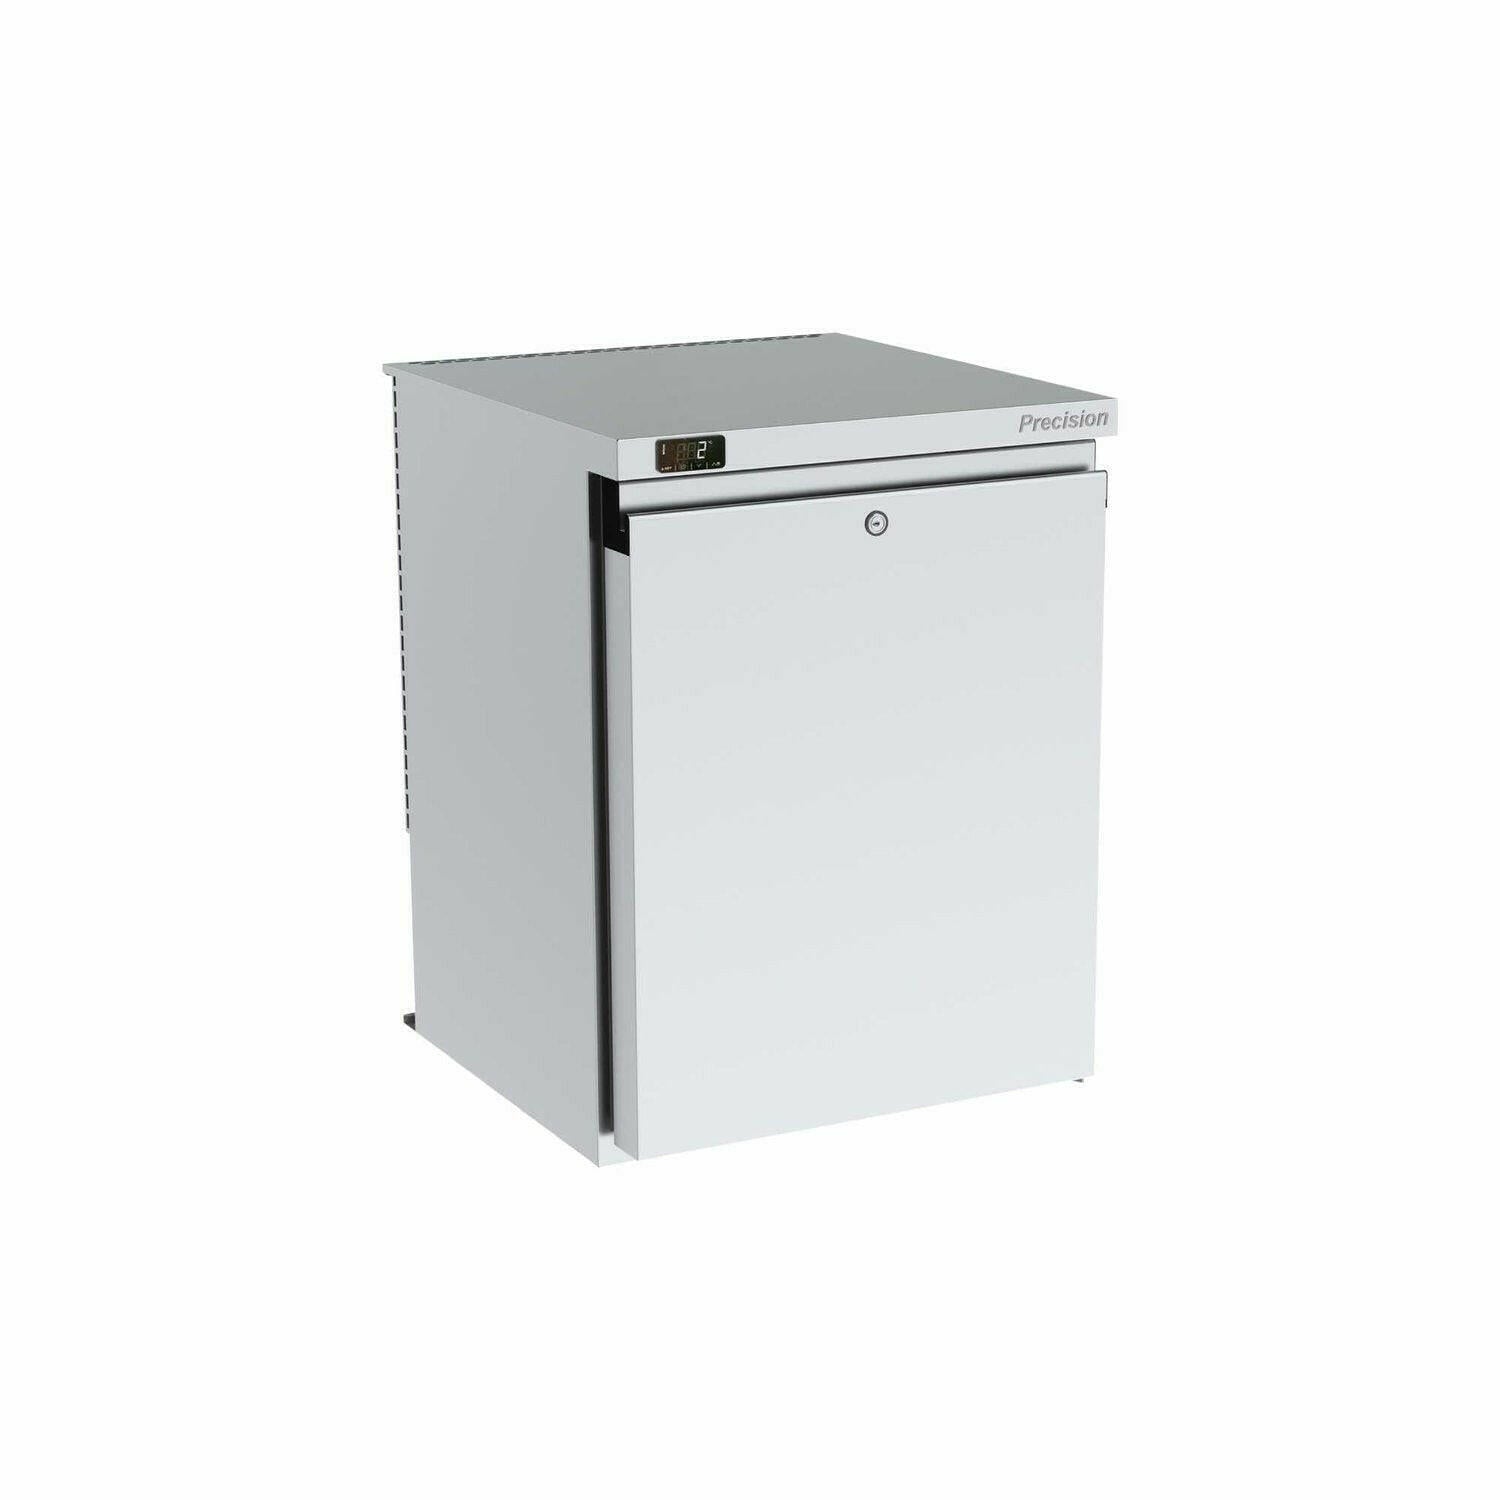 Precision LPU 150 Stainless Steel Undercounter Freezer 150 Litres